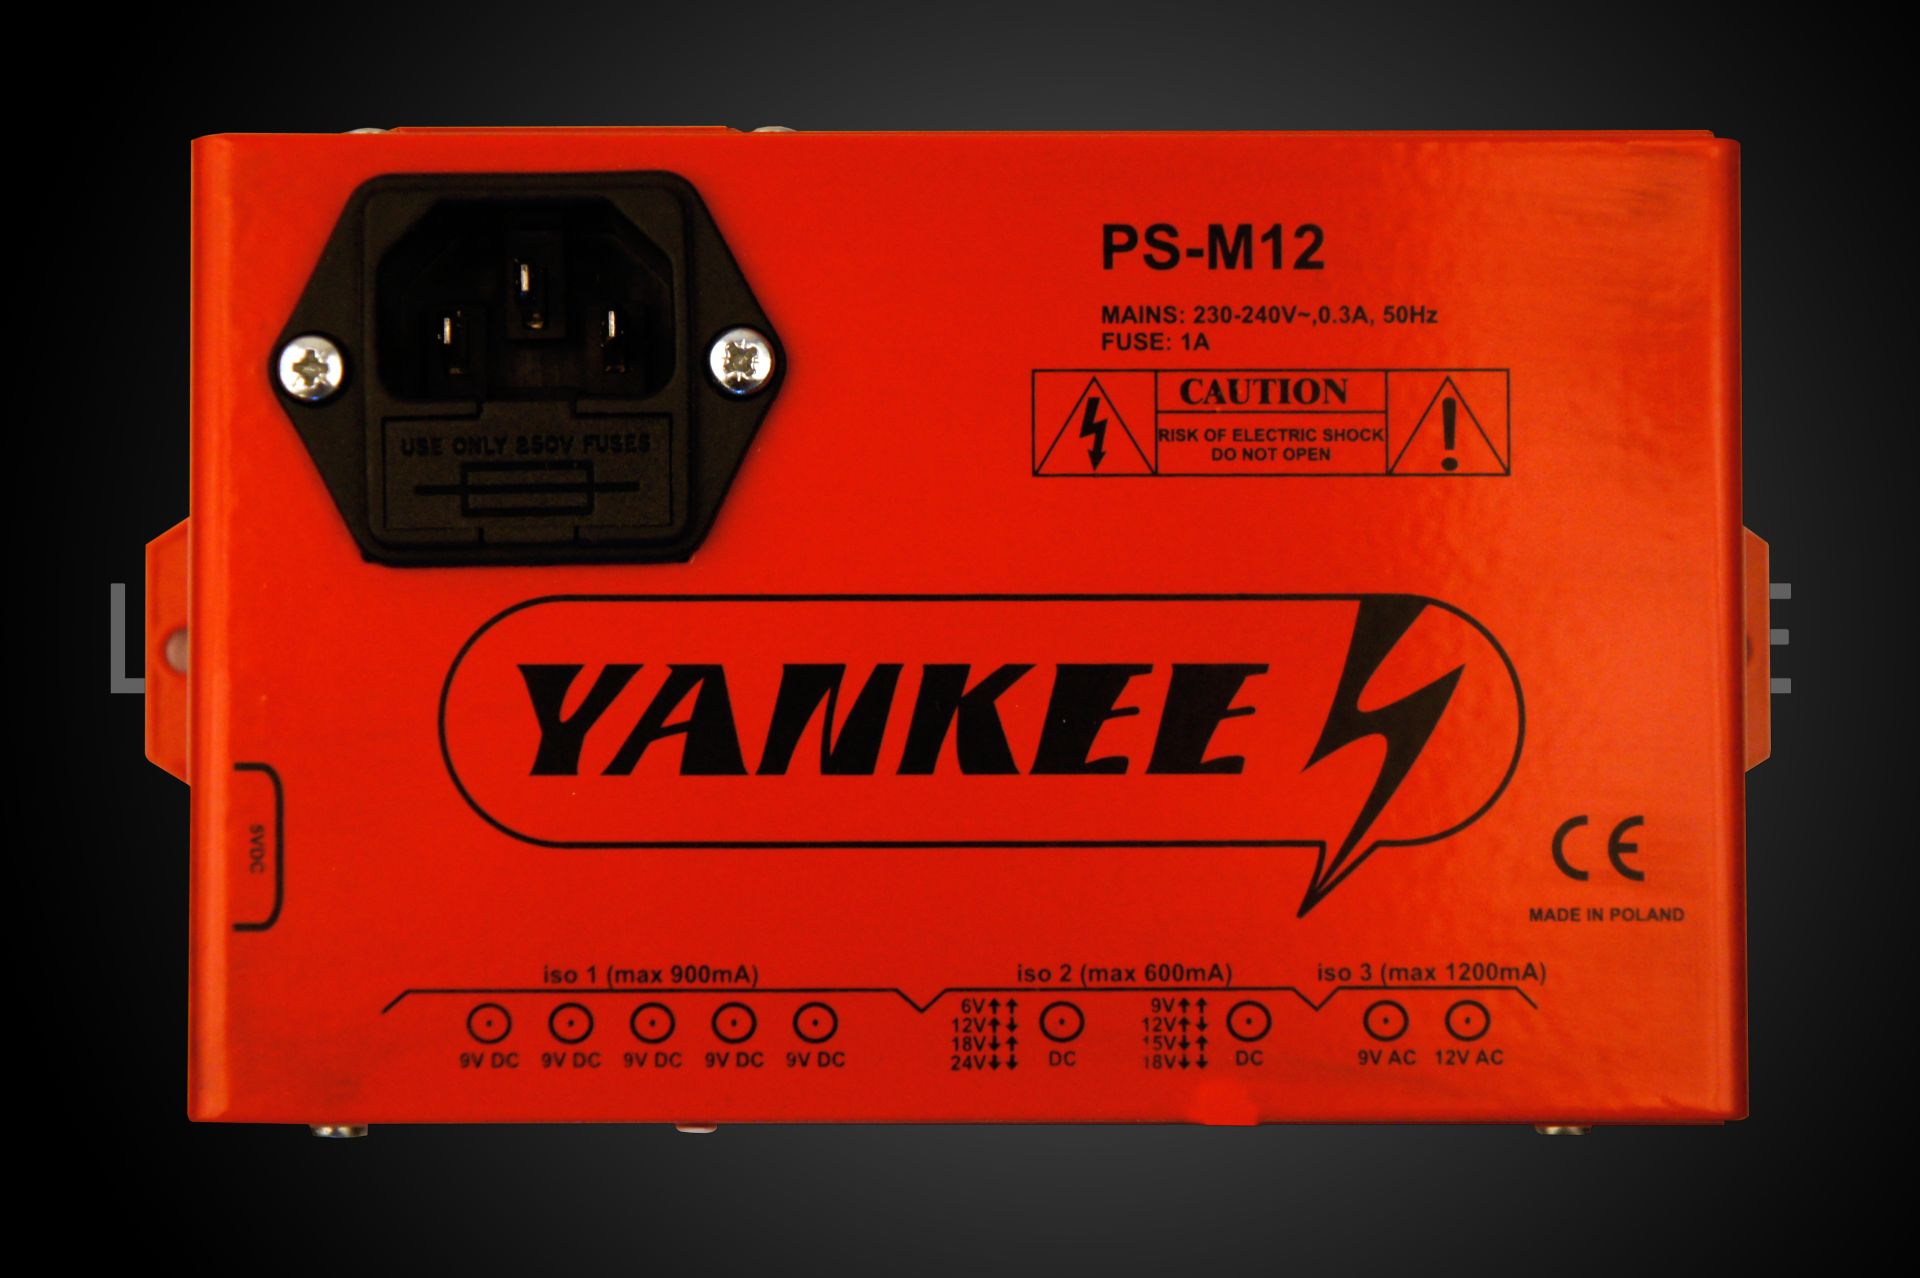 Yankee Yankee PS-M12